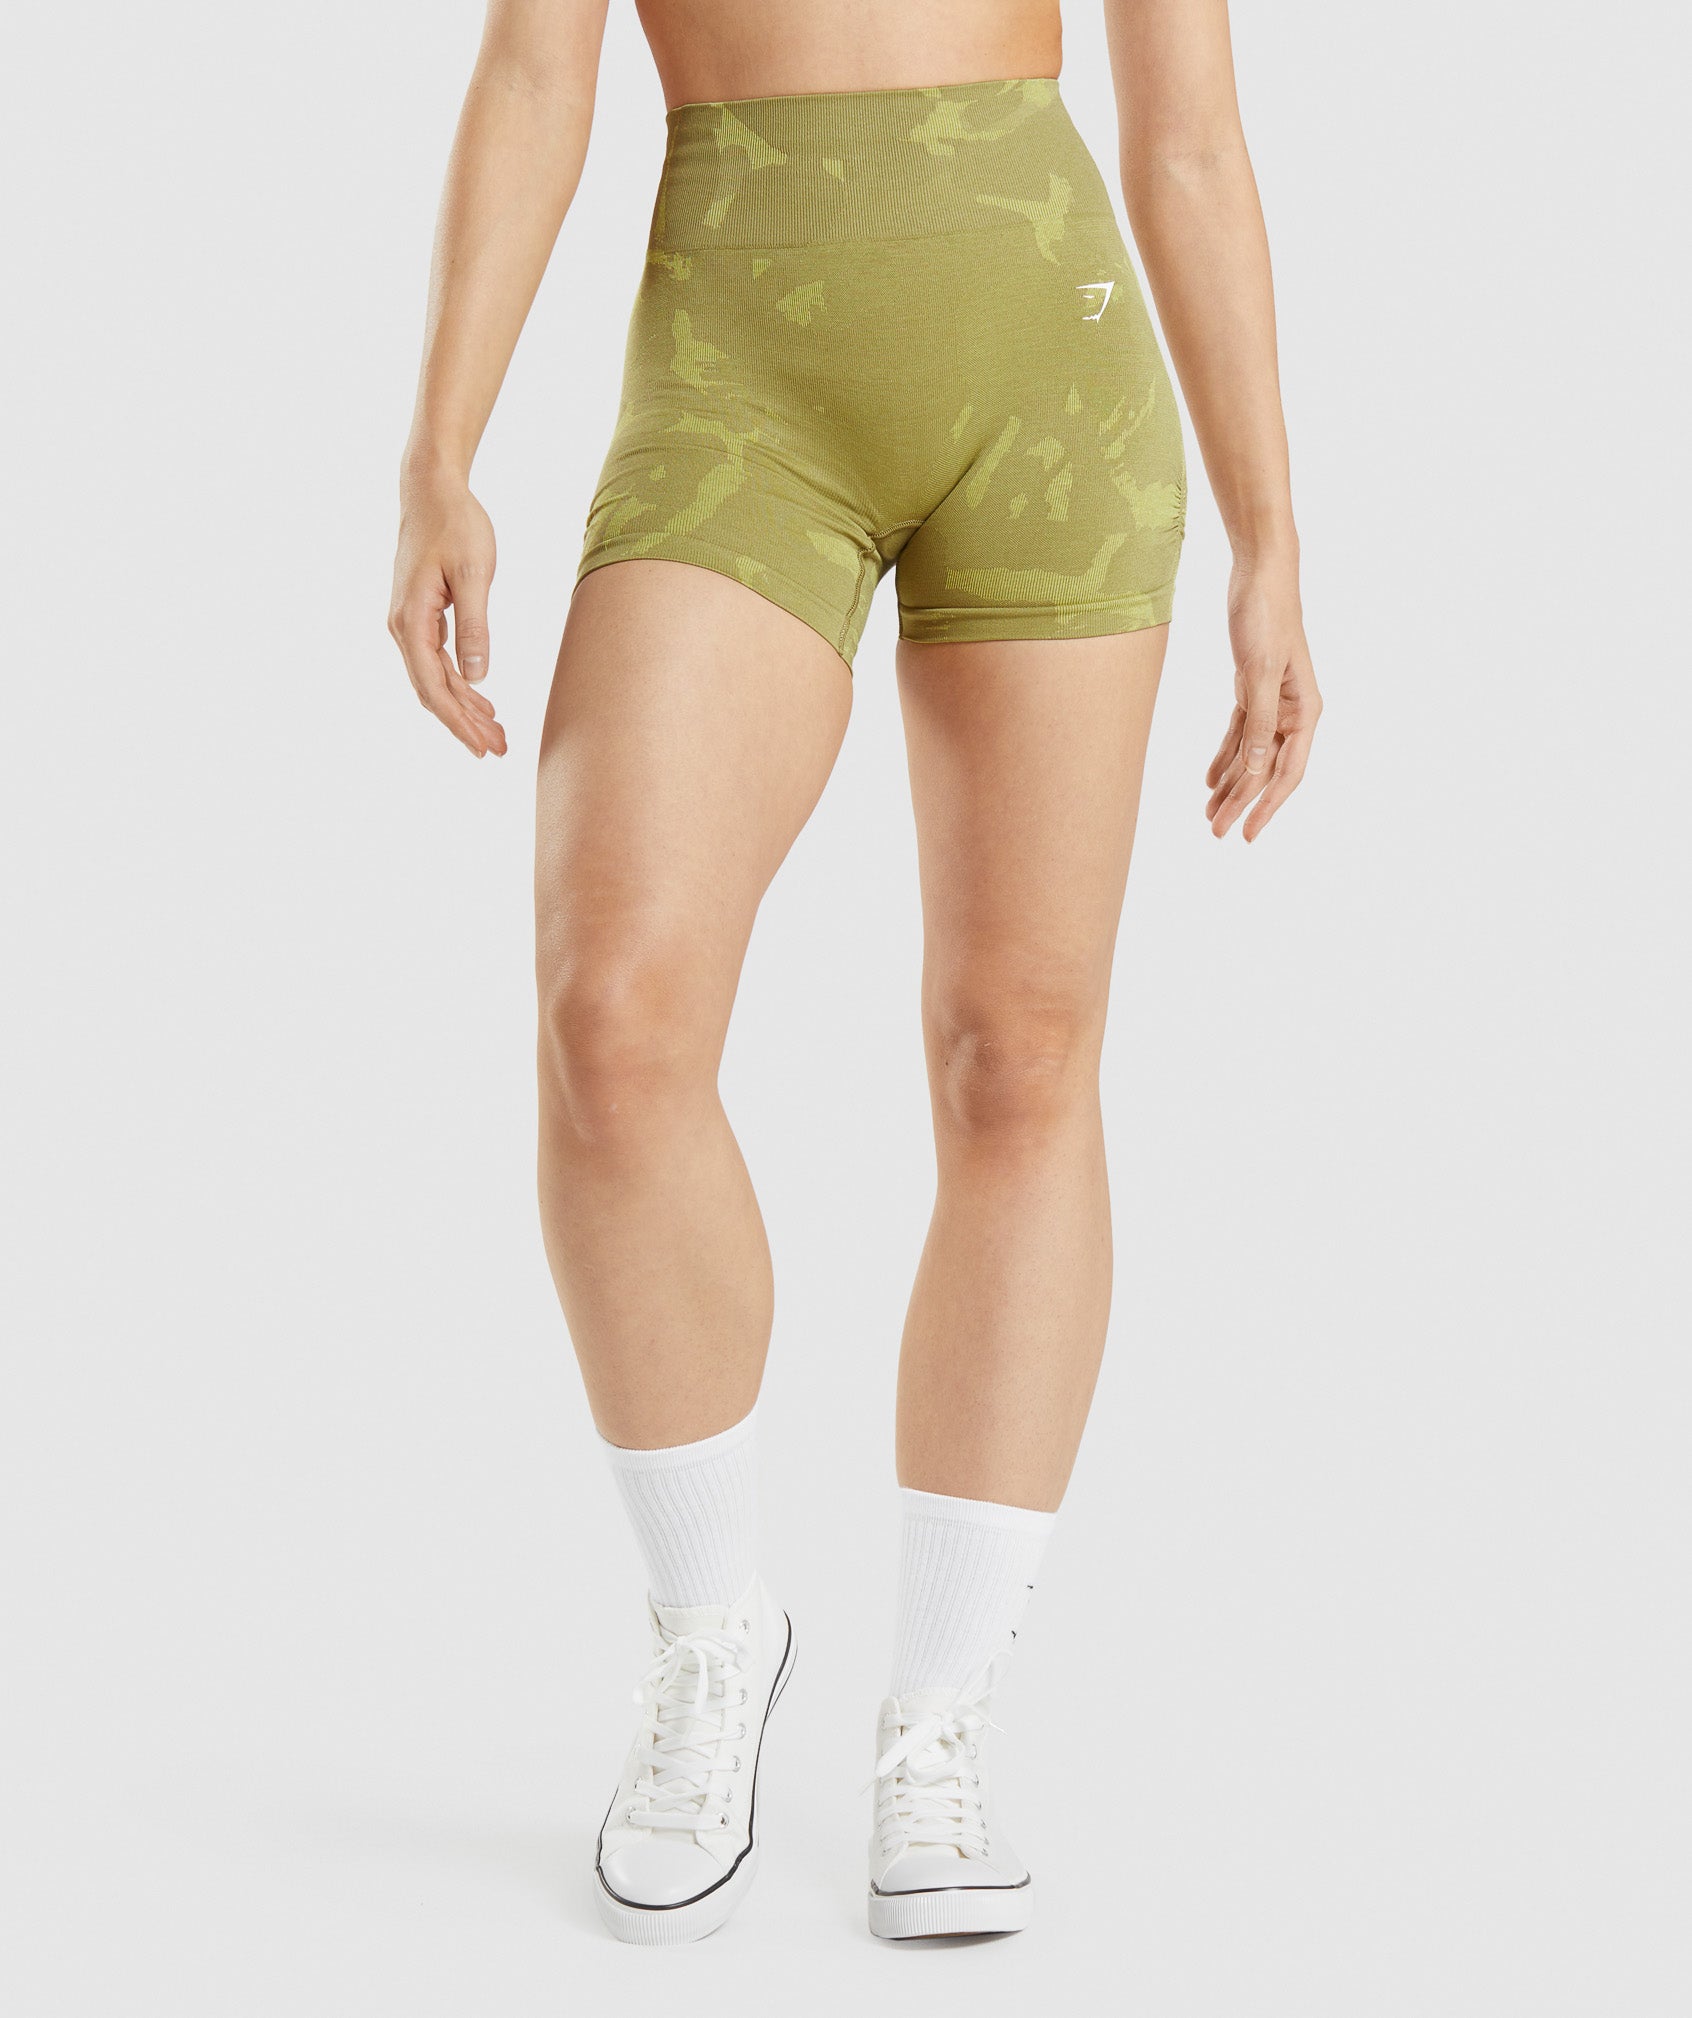 NEW Gymshark Adapt Ombré / Adapt Animal / Mercury Seamless Shorts Set of 3  - Athletic apparel